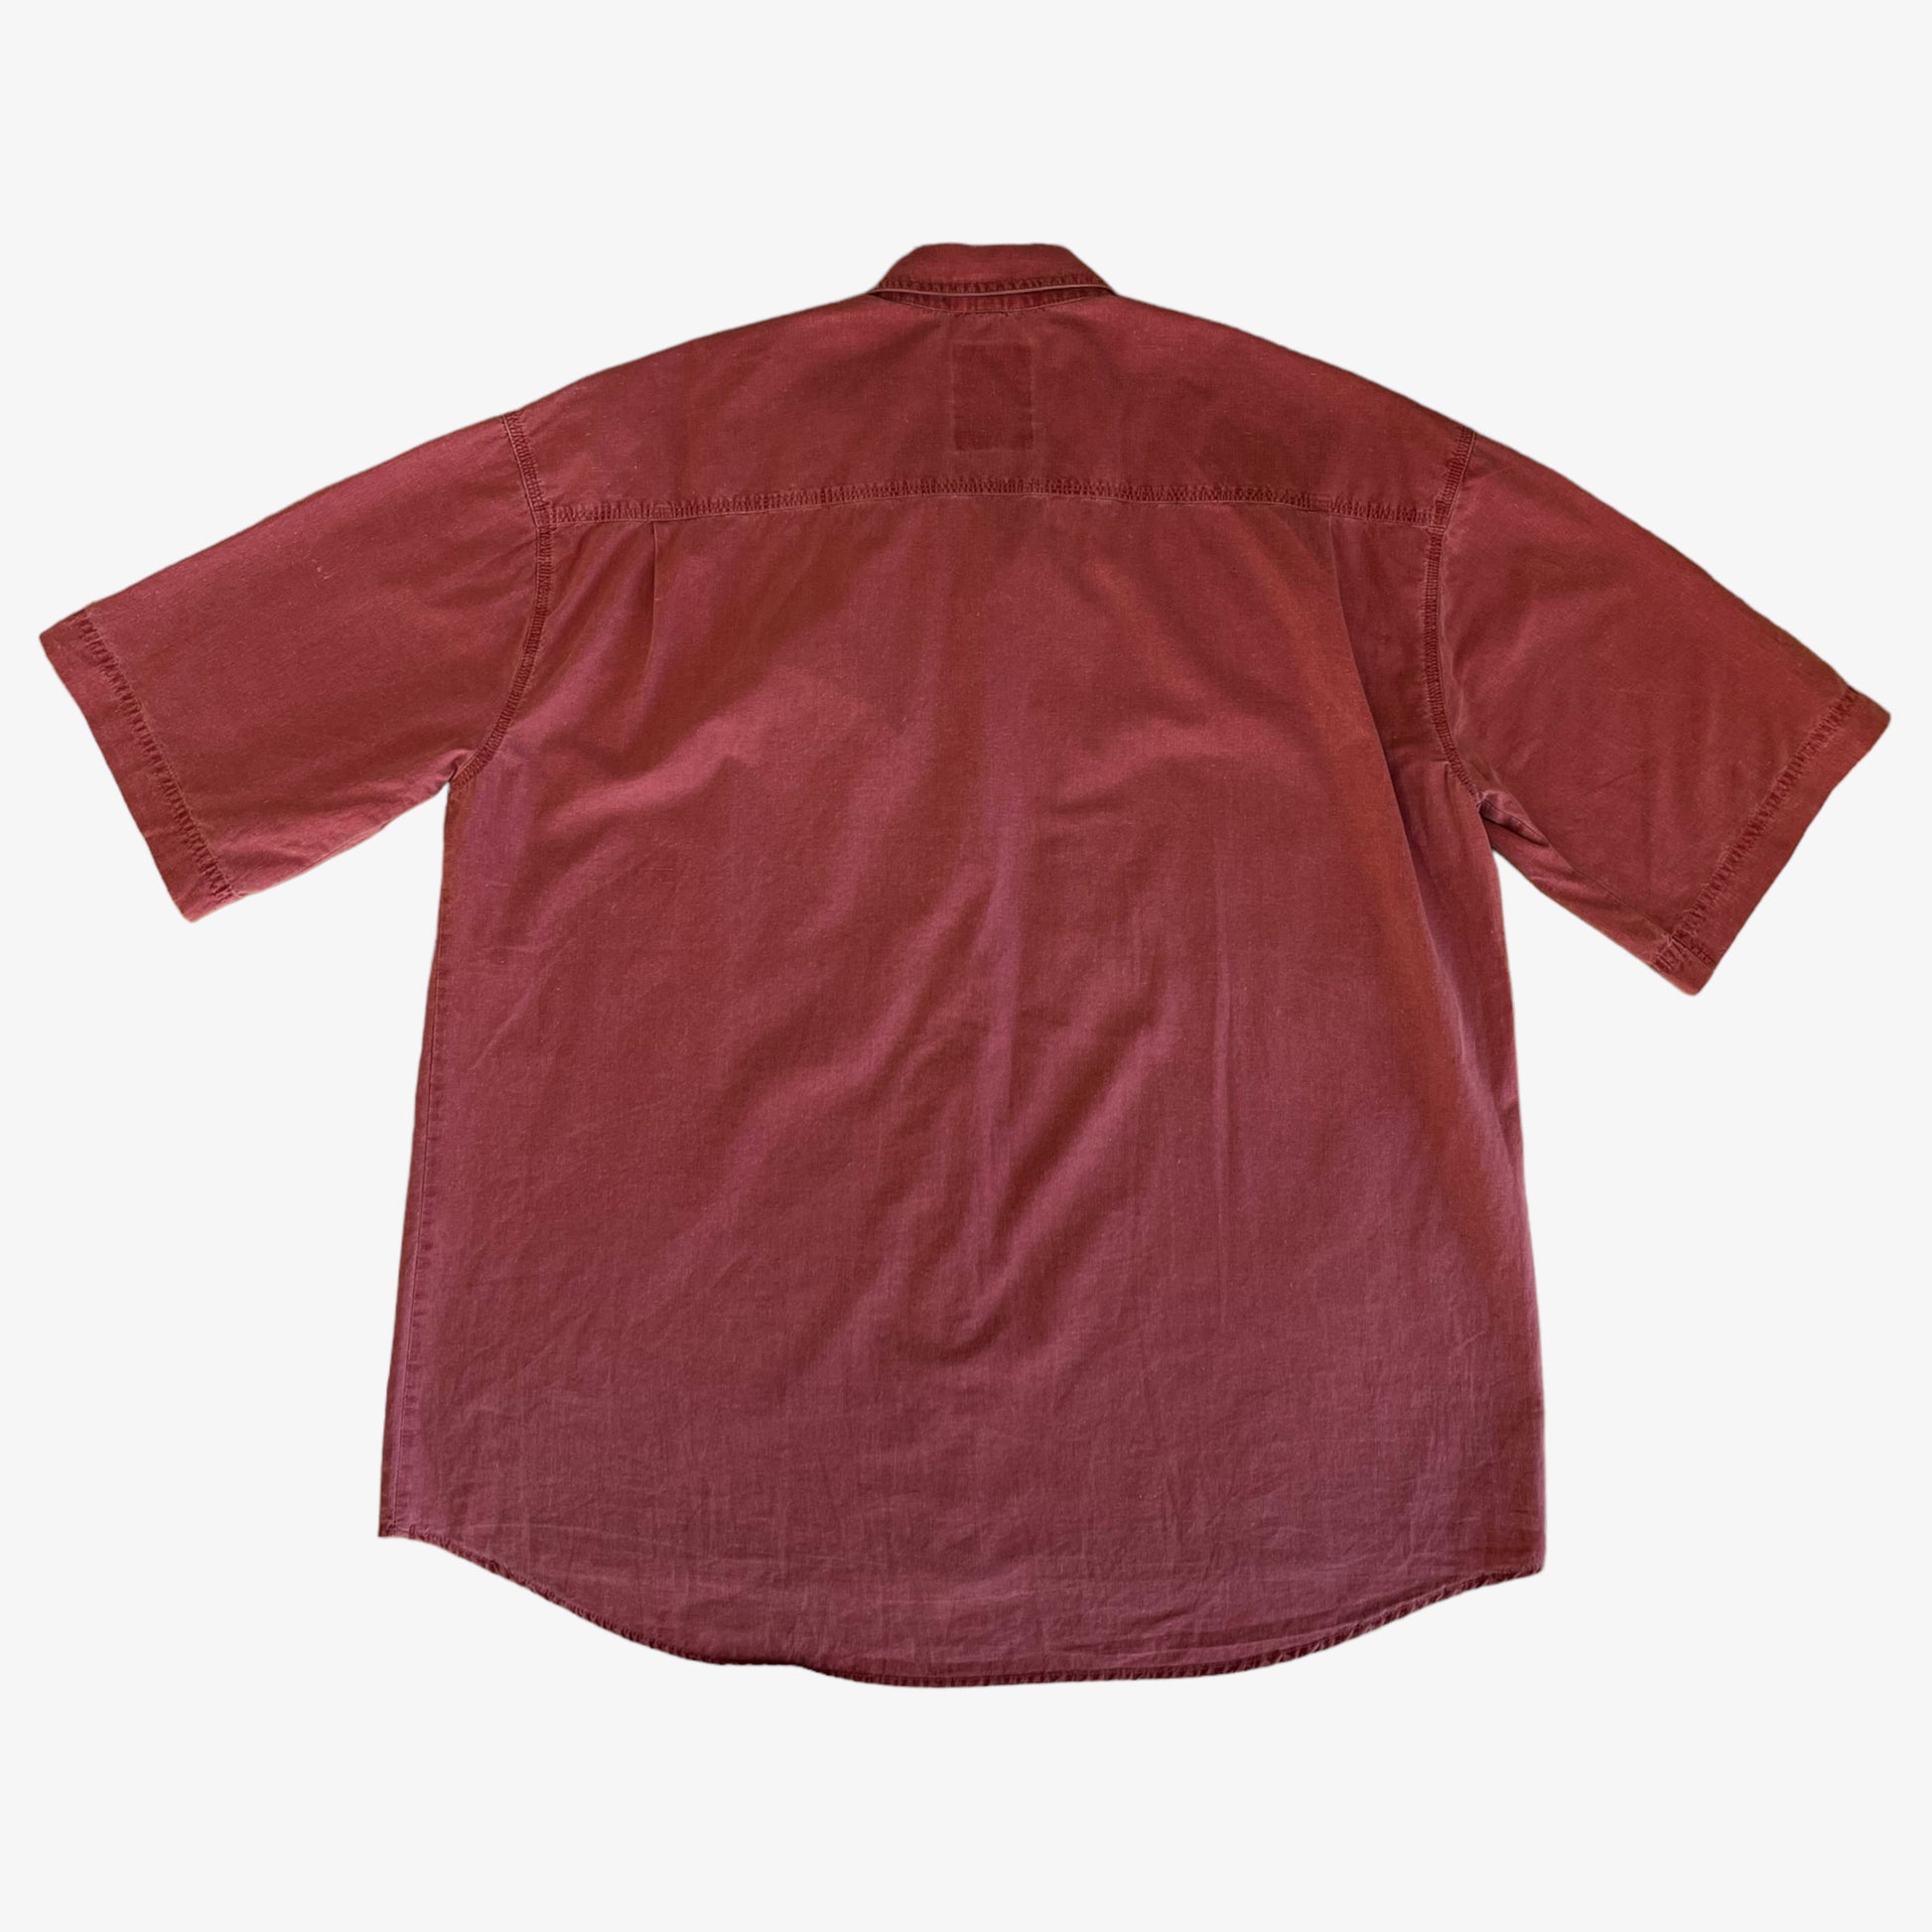 Vintage 90s Camel Cigarettes Pale Red Short Sleeve Shirt Back - Casspios Dream